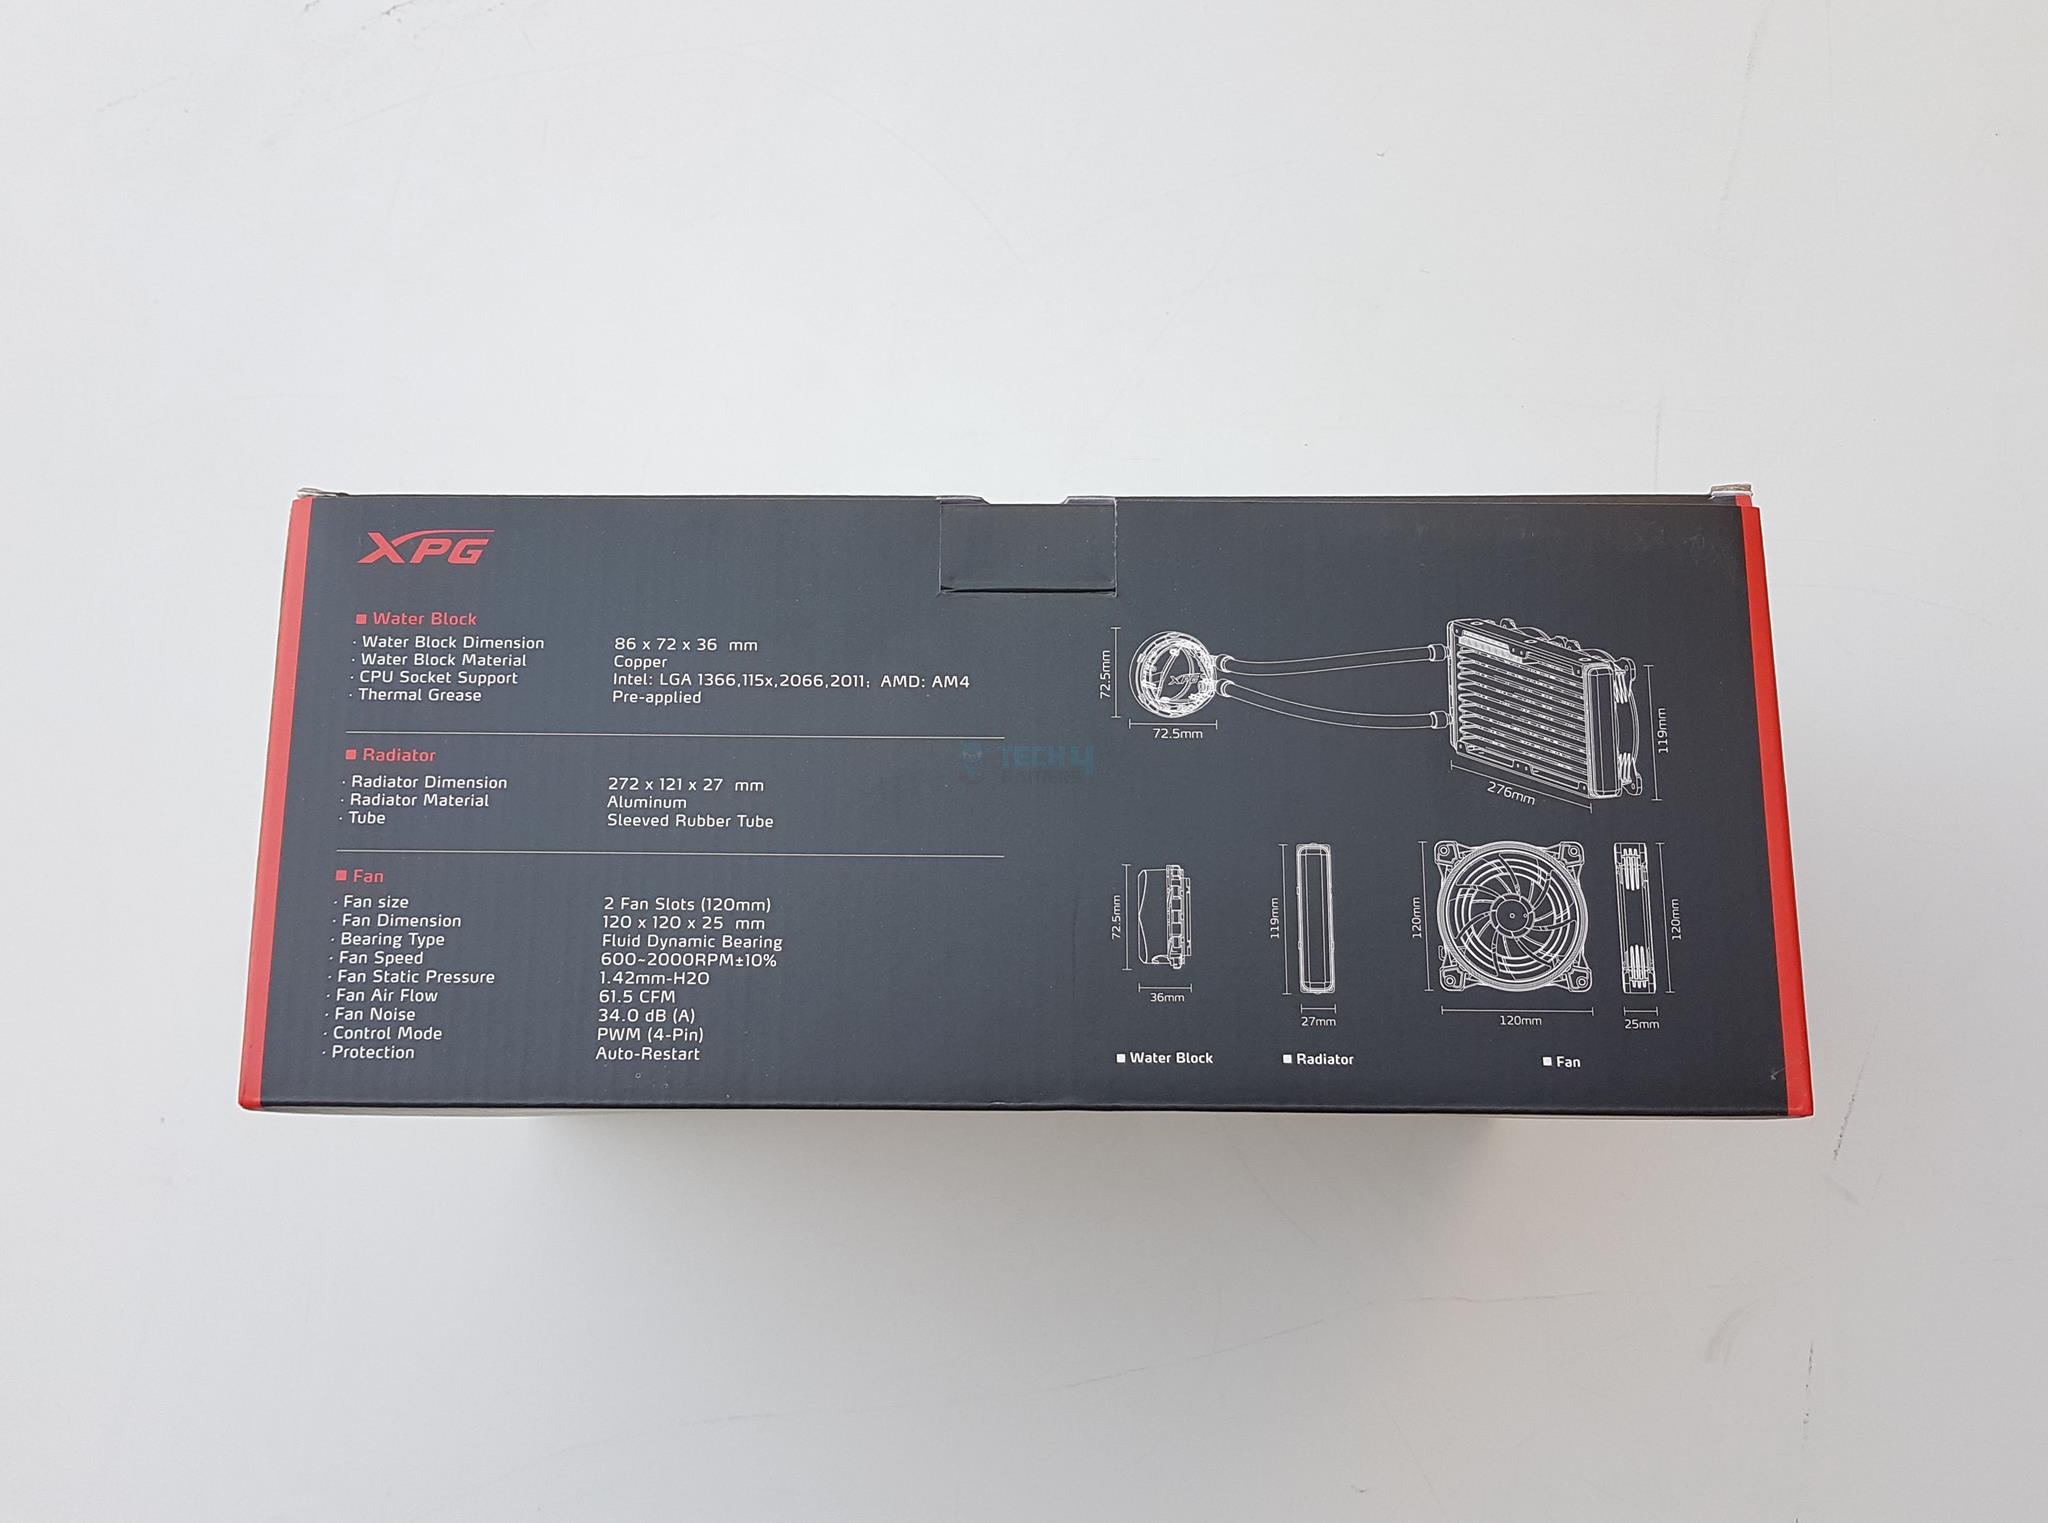 XPG Levante 240 Liquid CPU Cooler — The backside of the box